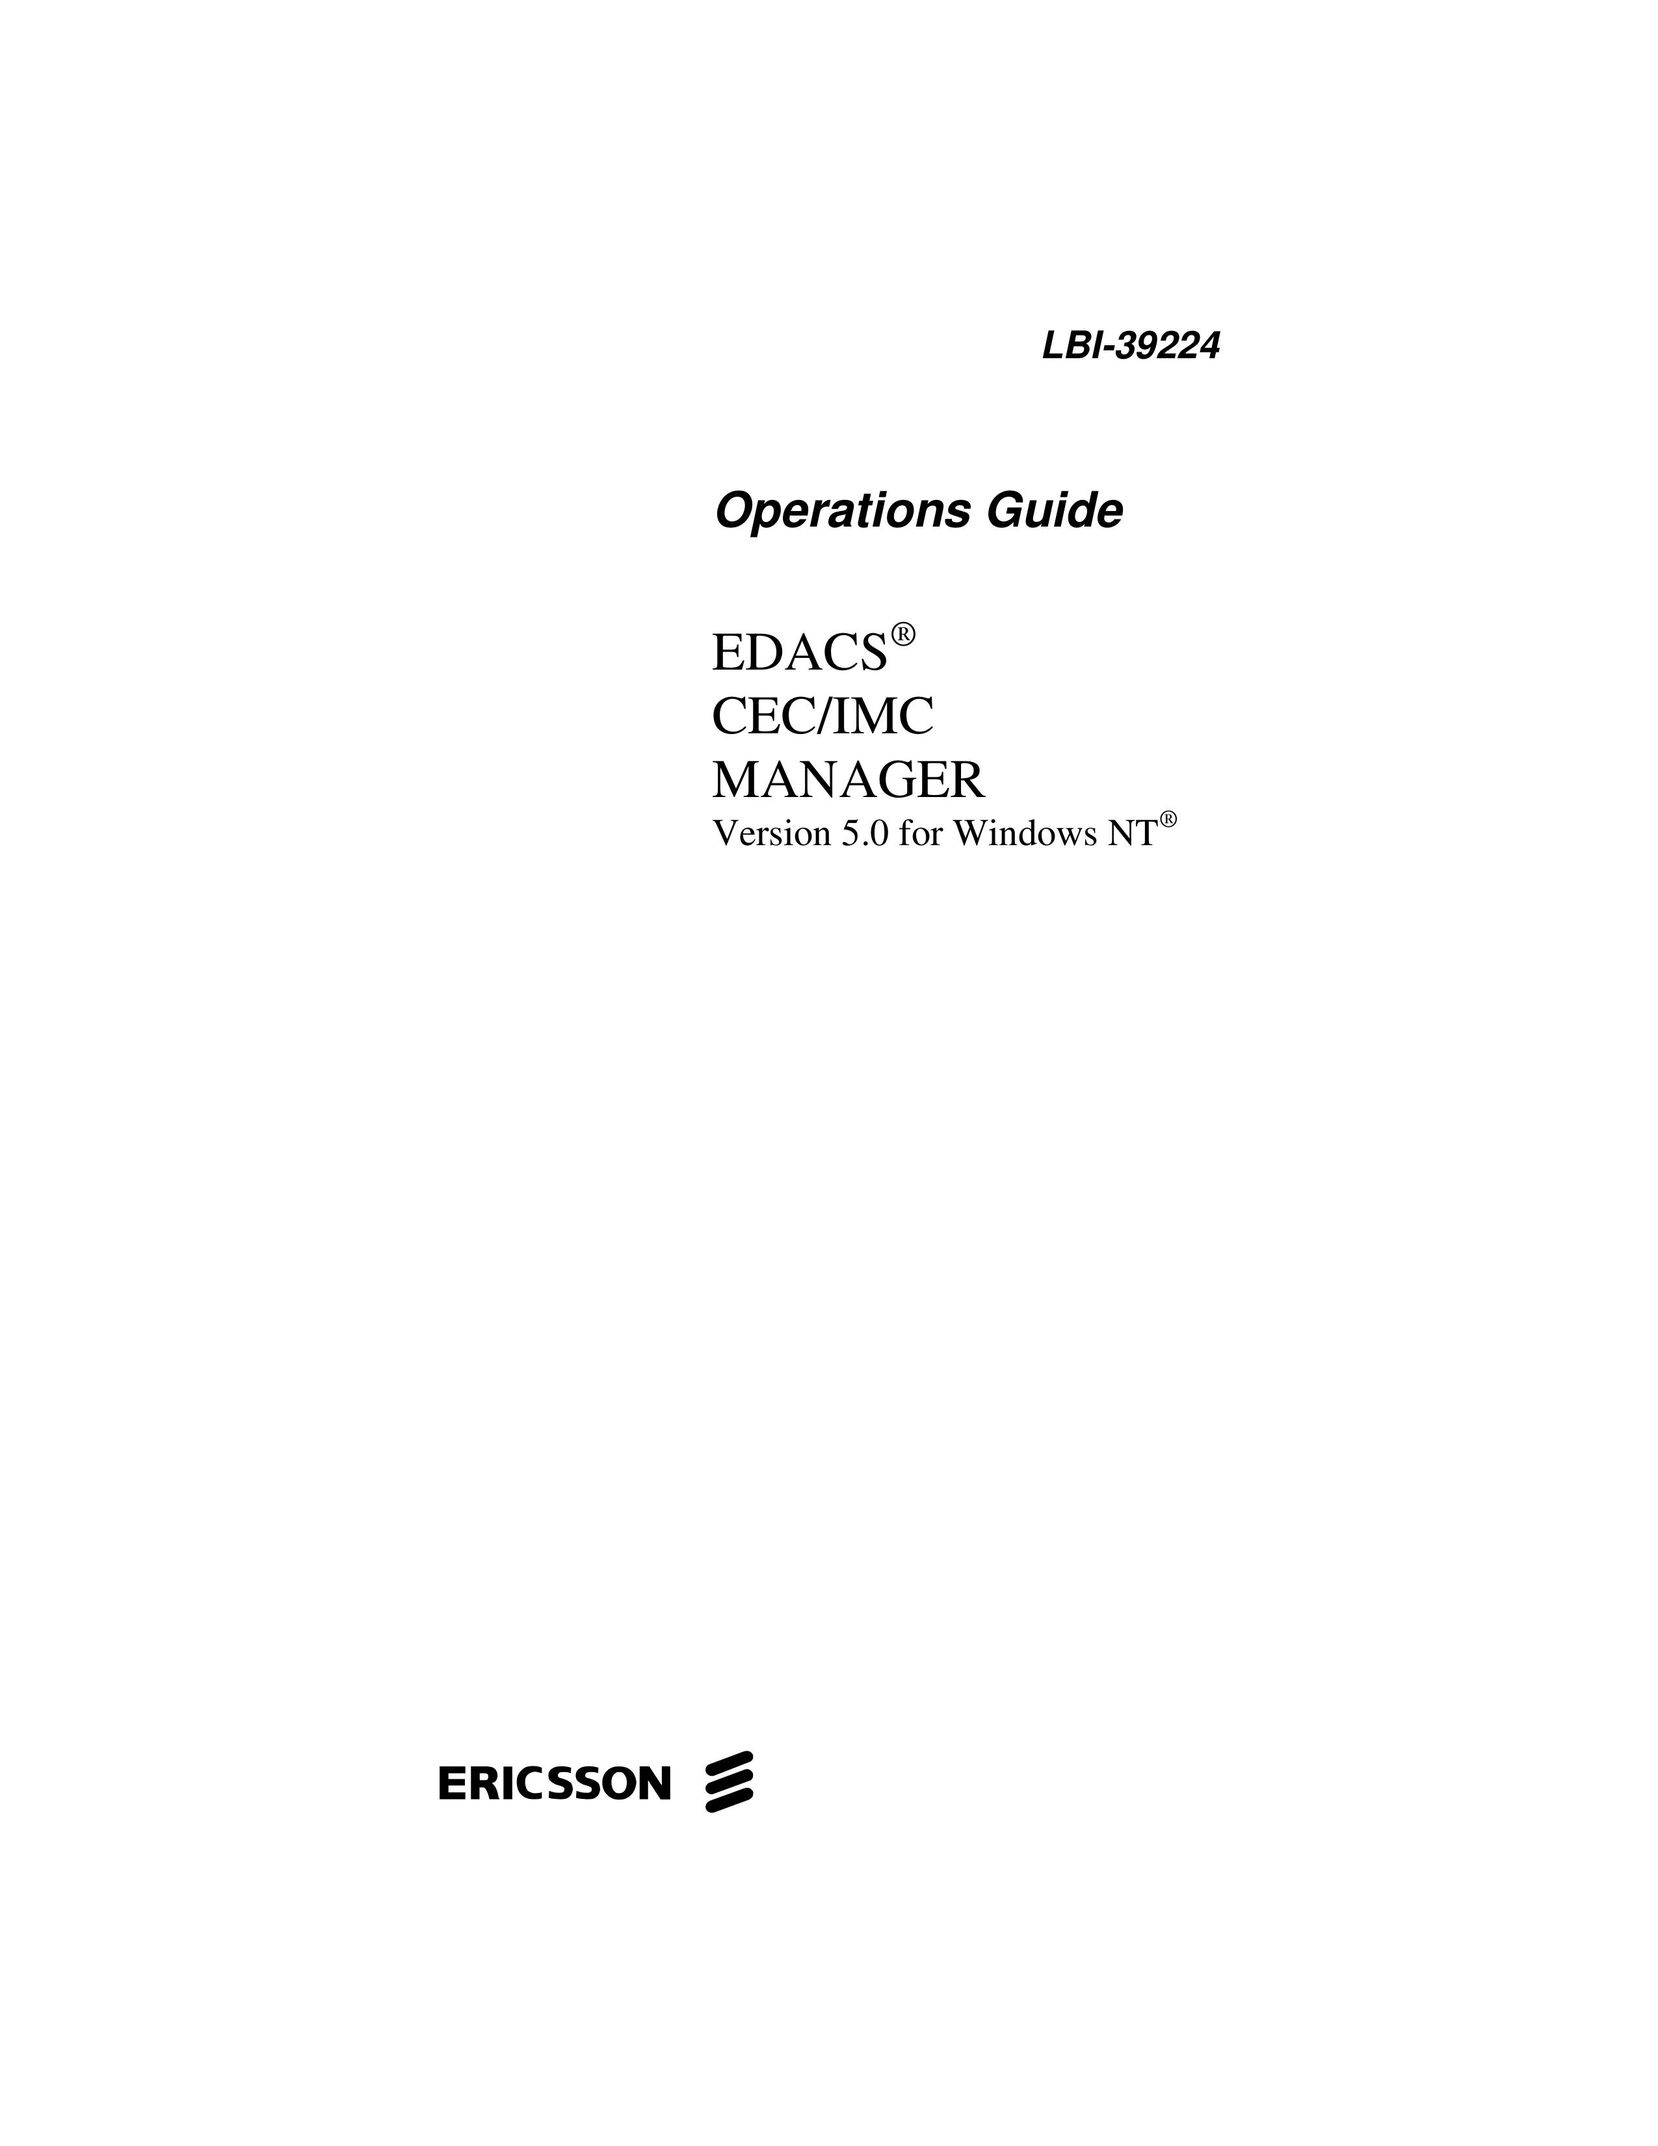 Ericsson LBI-39224 Personal Computer User Manual